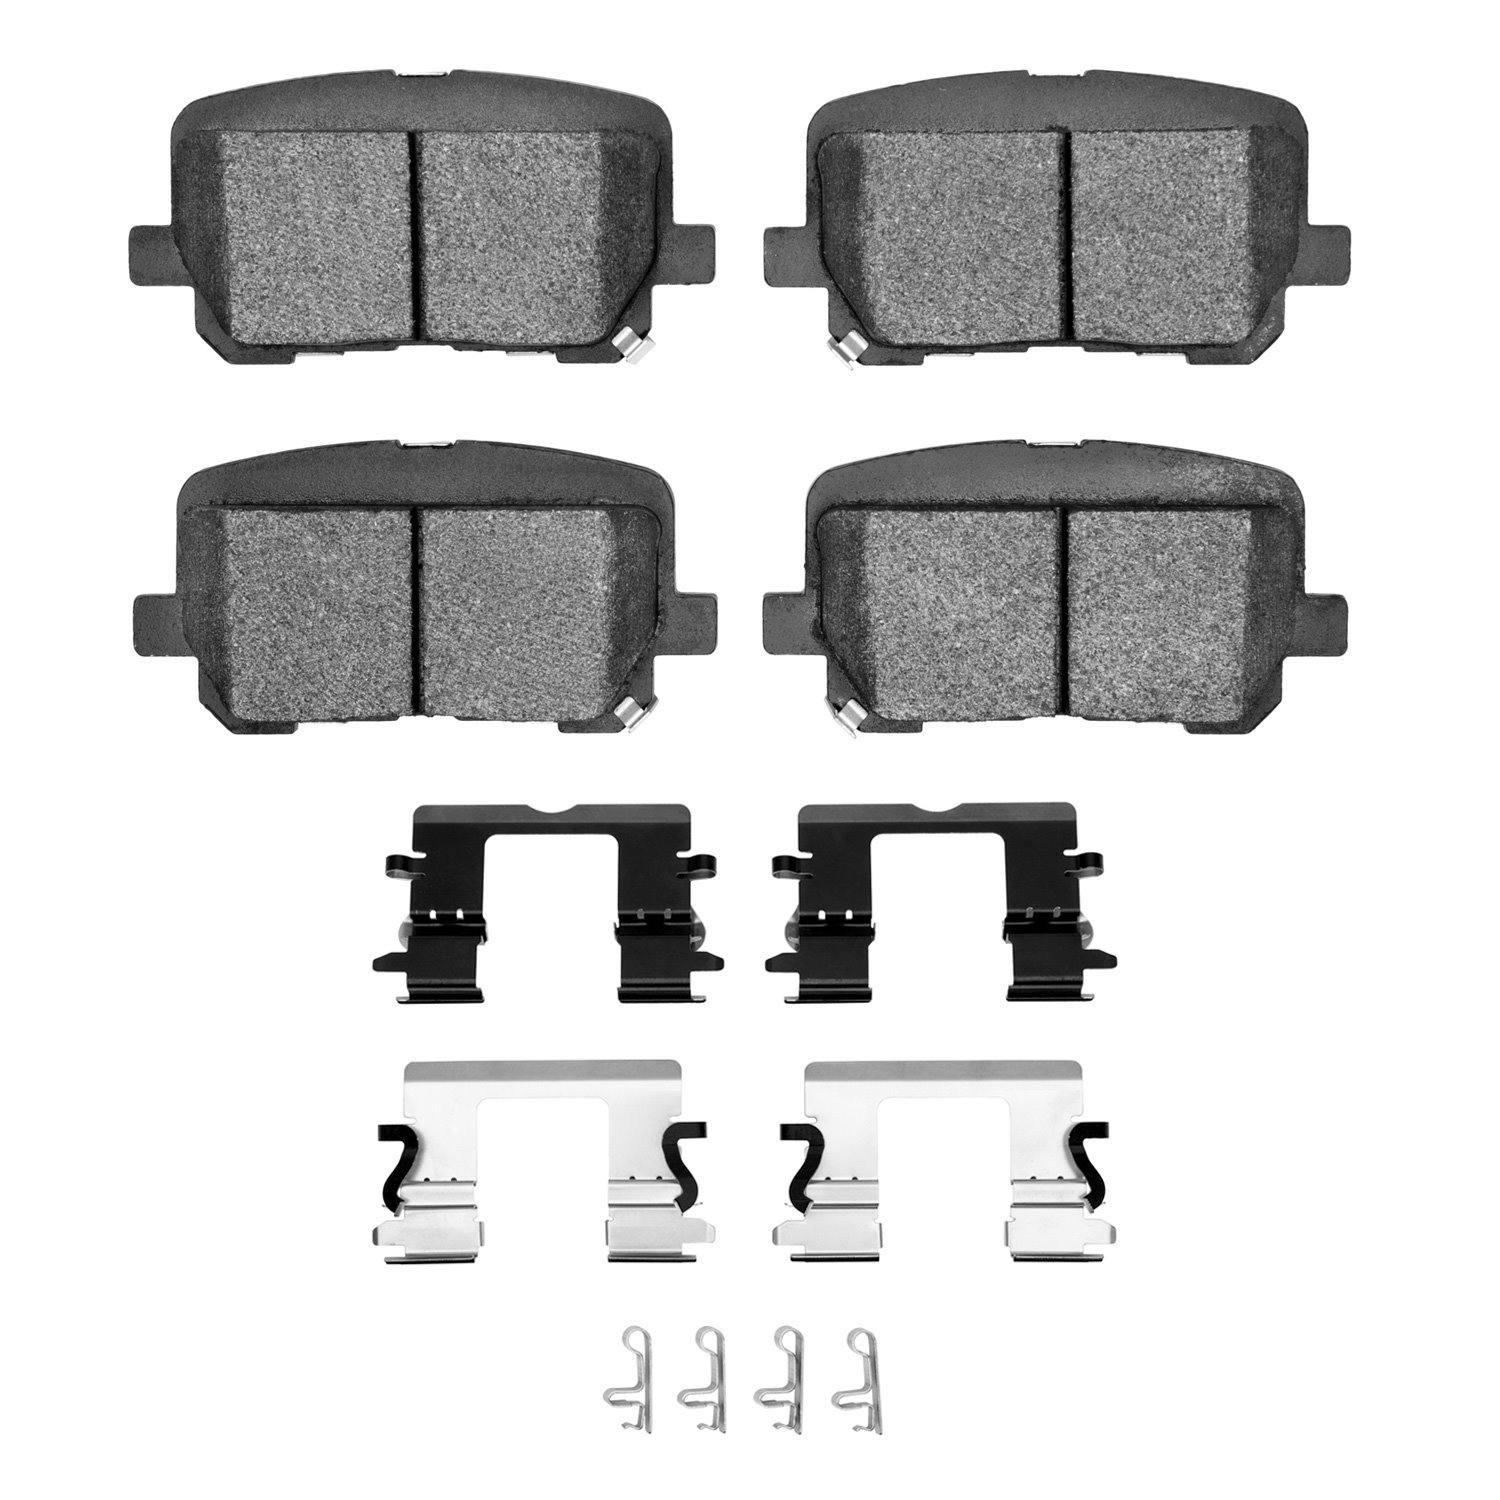 1551-1766-01 5000 Advanced Low-Metallic Brake Pads & Hardware Kit, Fits Select Mopar, Position: Rear